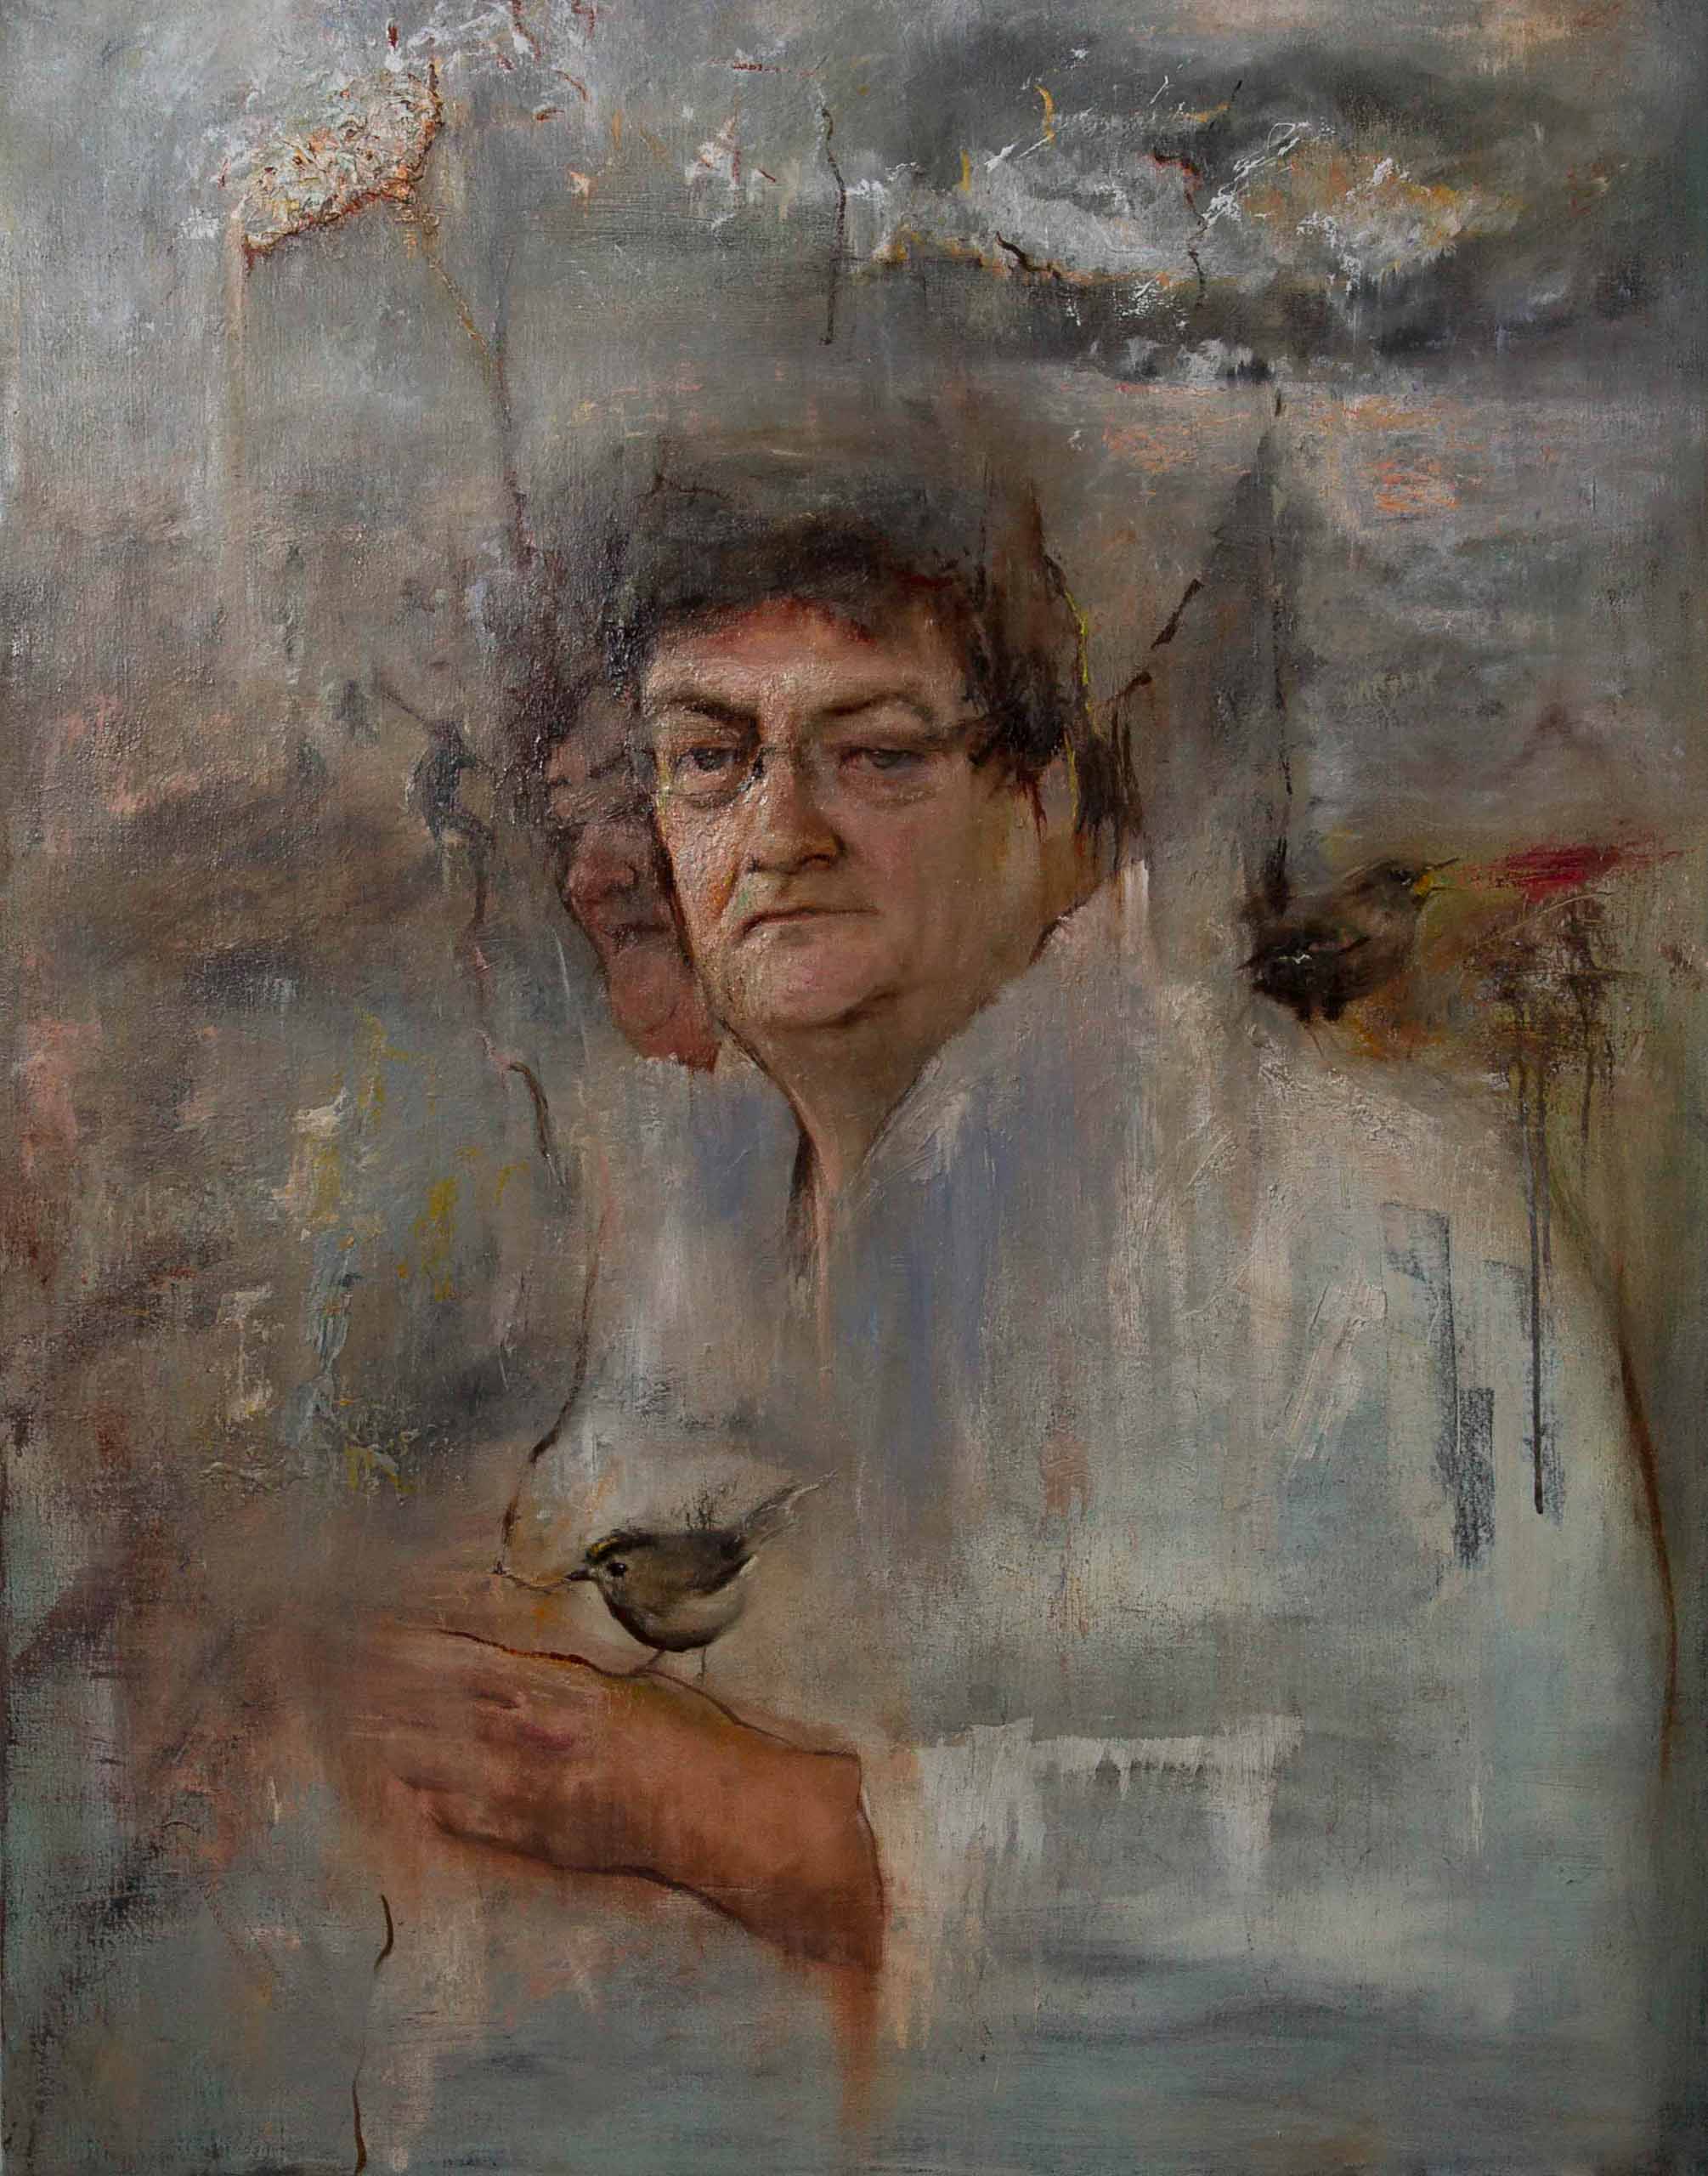 Alan Lawson, All One Breath, Portrait of John Burnside, Oil on linen, 70 x 90 cm, 2016, Scottish National Portrait Gallery